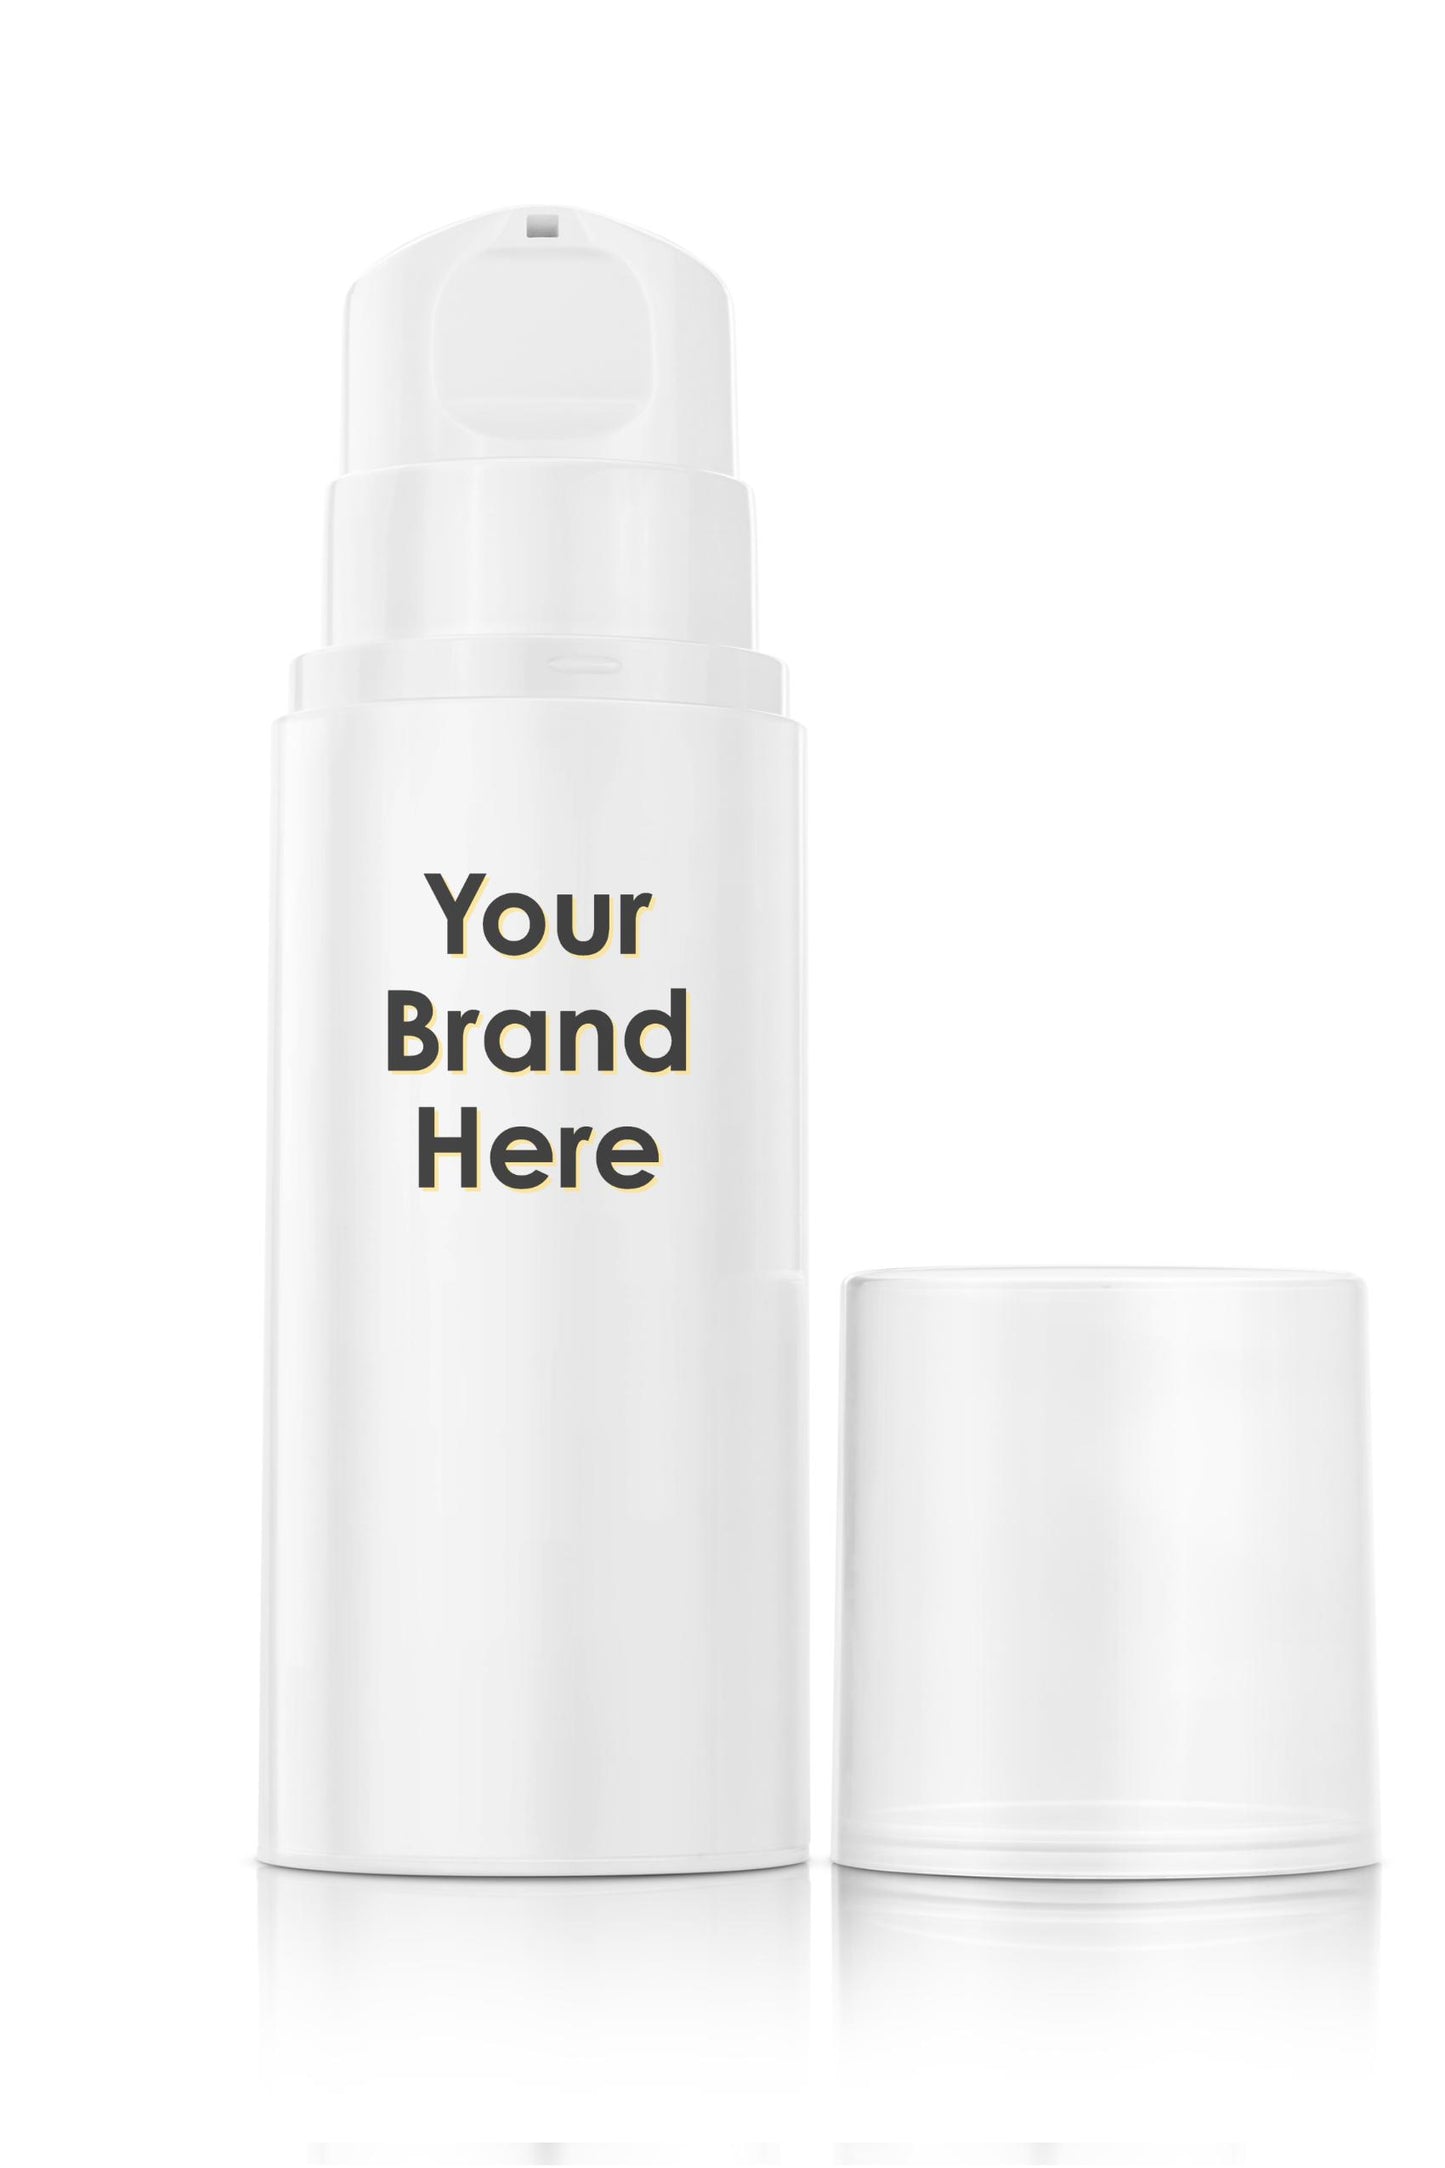 15% Glycolic Acid Peel-Cellular Cosmetics Private Label Skin Care Australian Cosmetic Manufacture